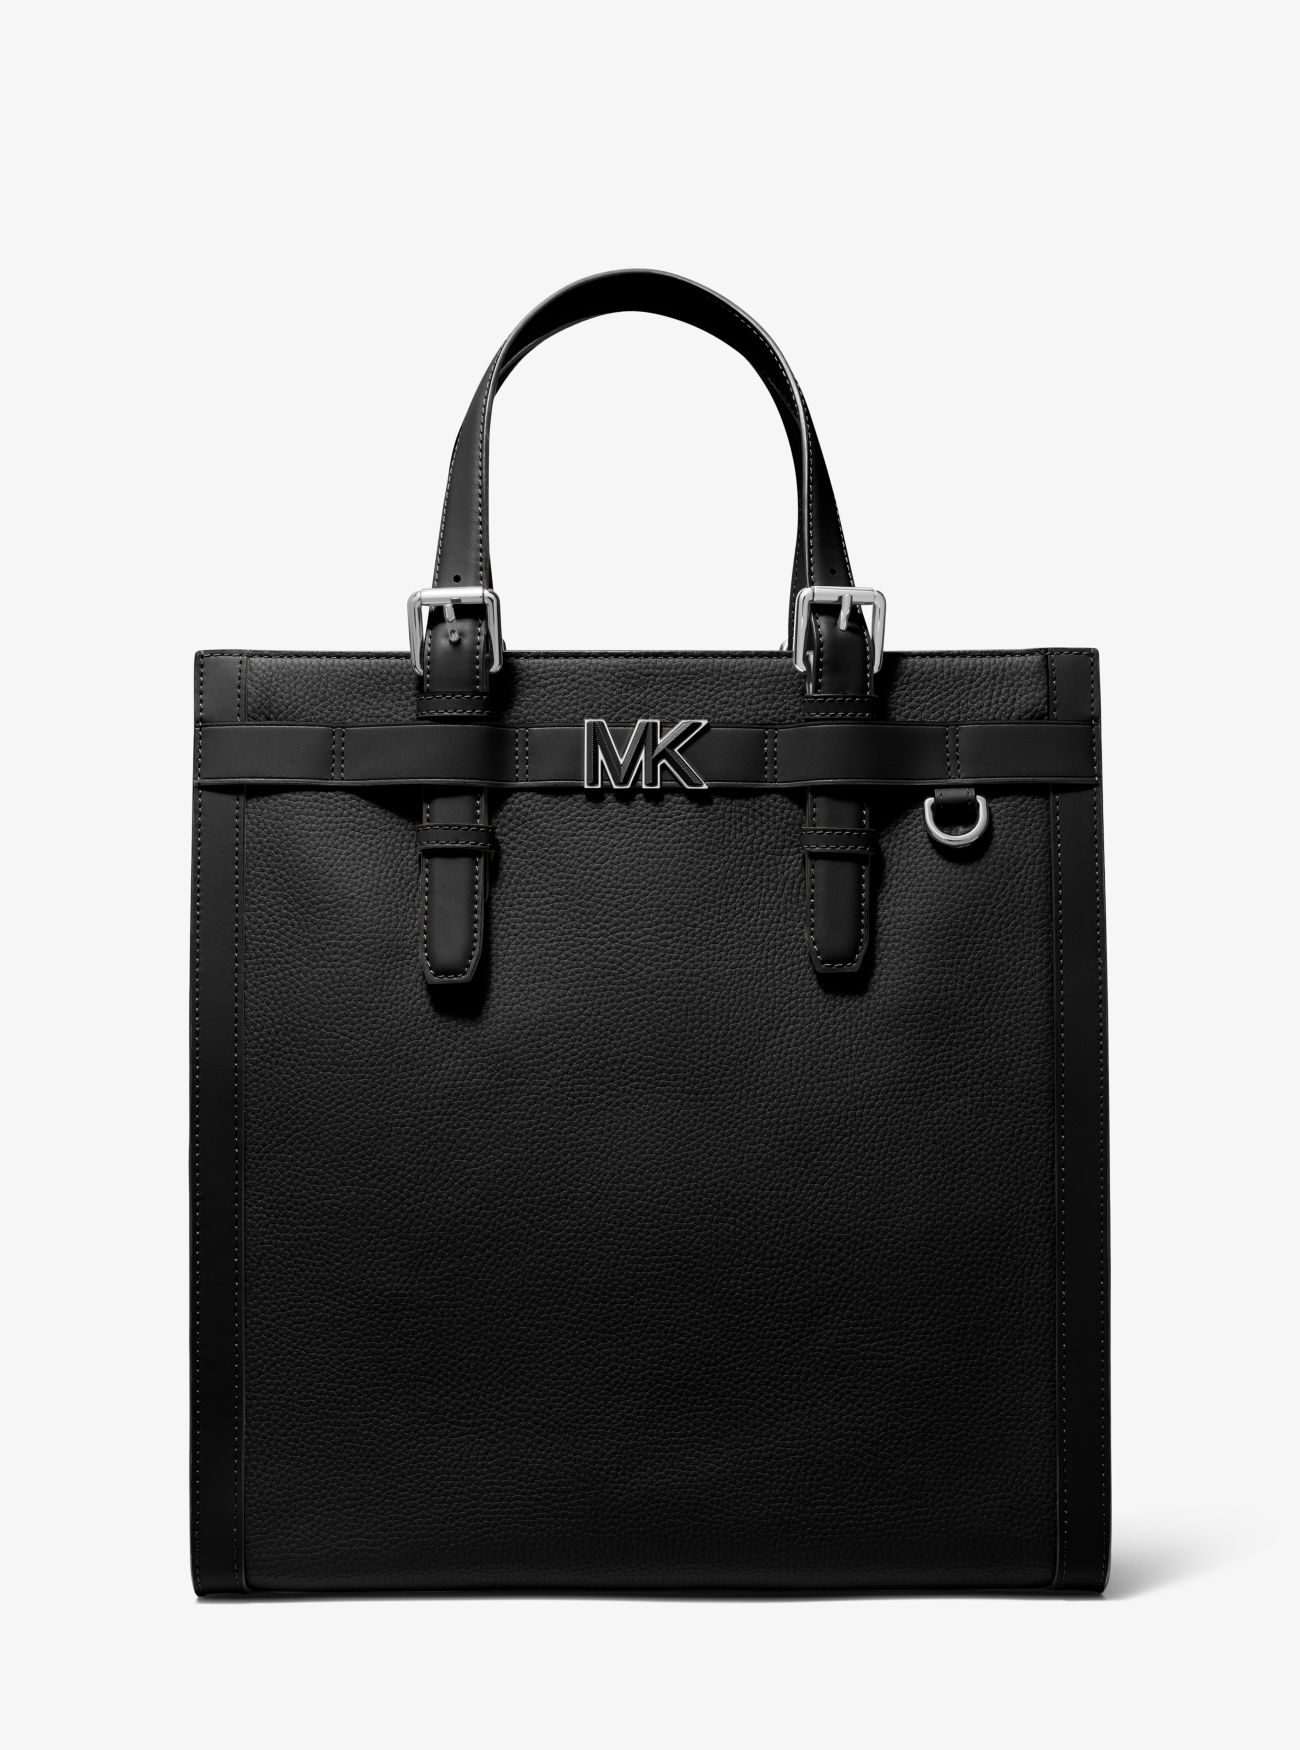 MK Hudson Pebbled Leather Tote Bag - Black - Michael Kors